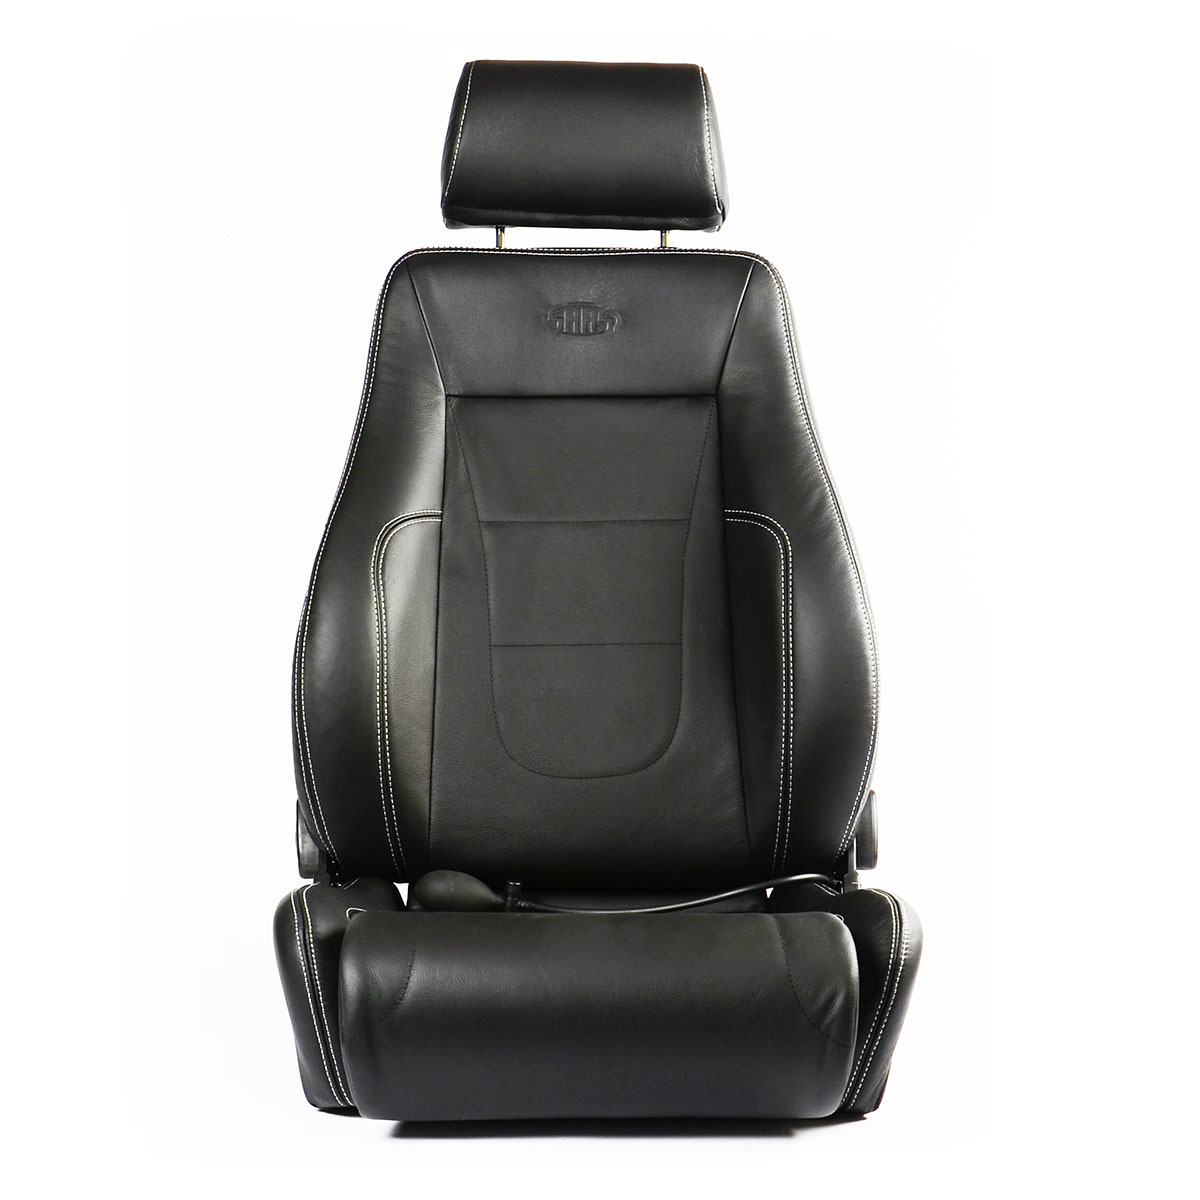 Trax 4x4 Seat Premium Black Leather ADR Compliant